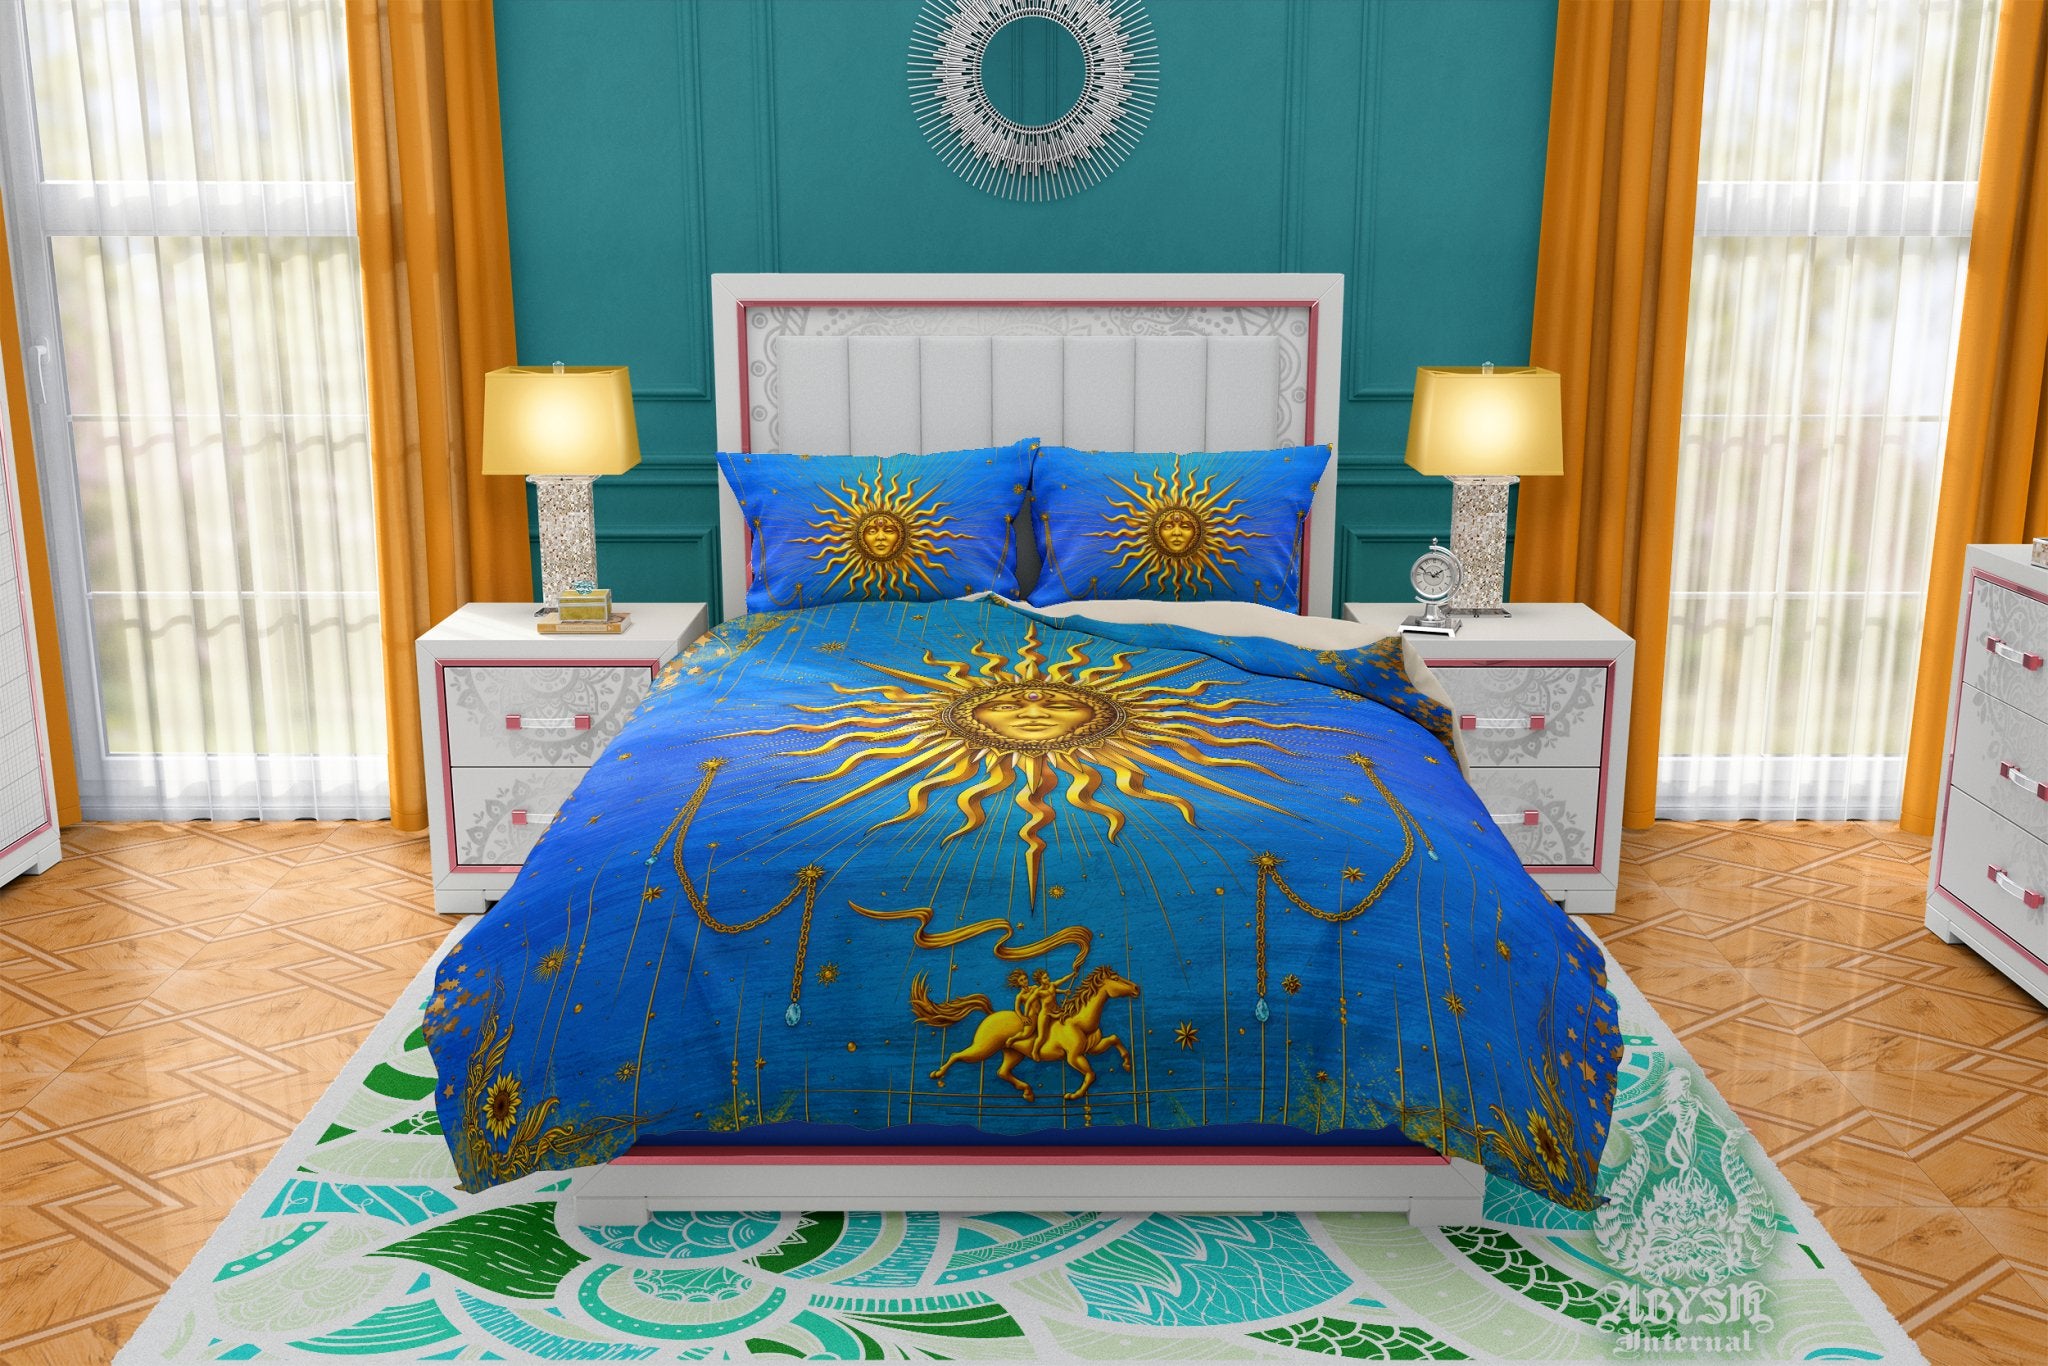 Gold Sun Duvet Cover, Bed Covering, Esoteric Comforter, Boho Bedroom Decor King, Queen & Twin Bedding Set - Indie Tarot Arcana Art, 7 Colors - Abysm Internal